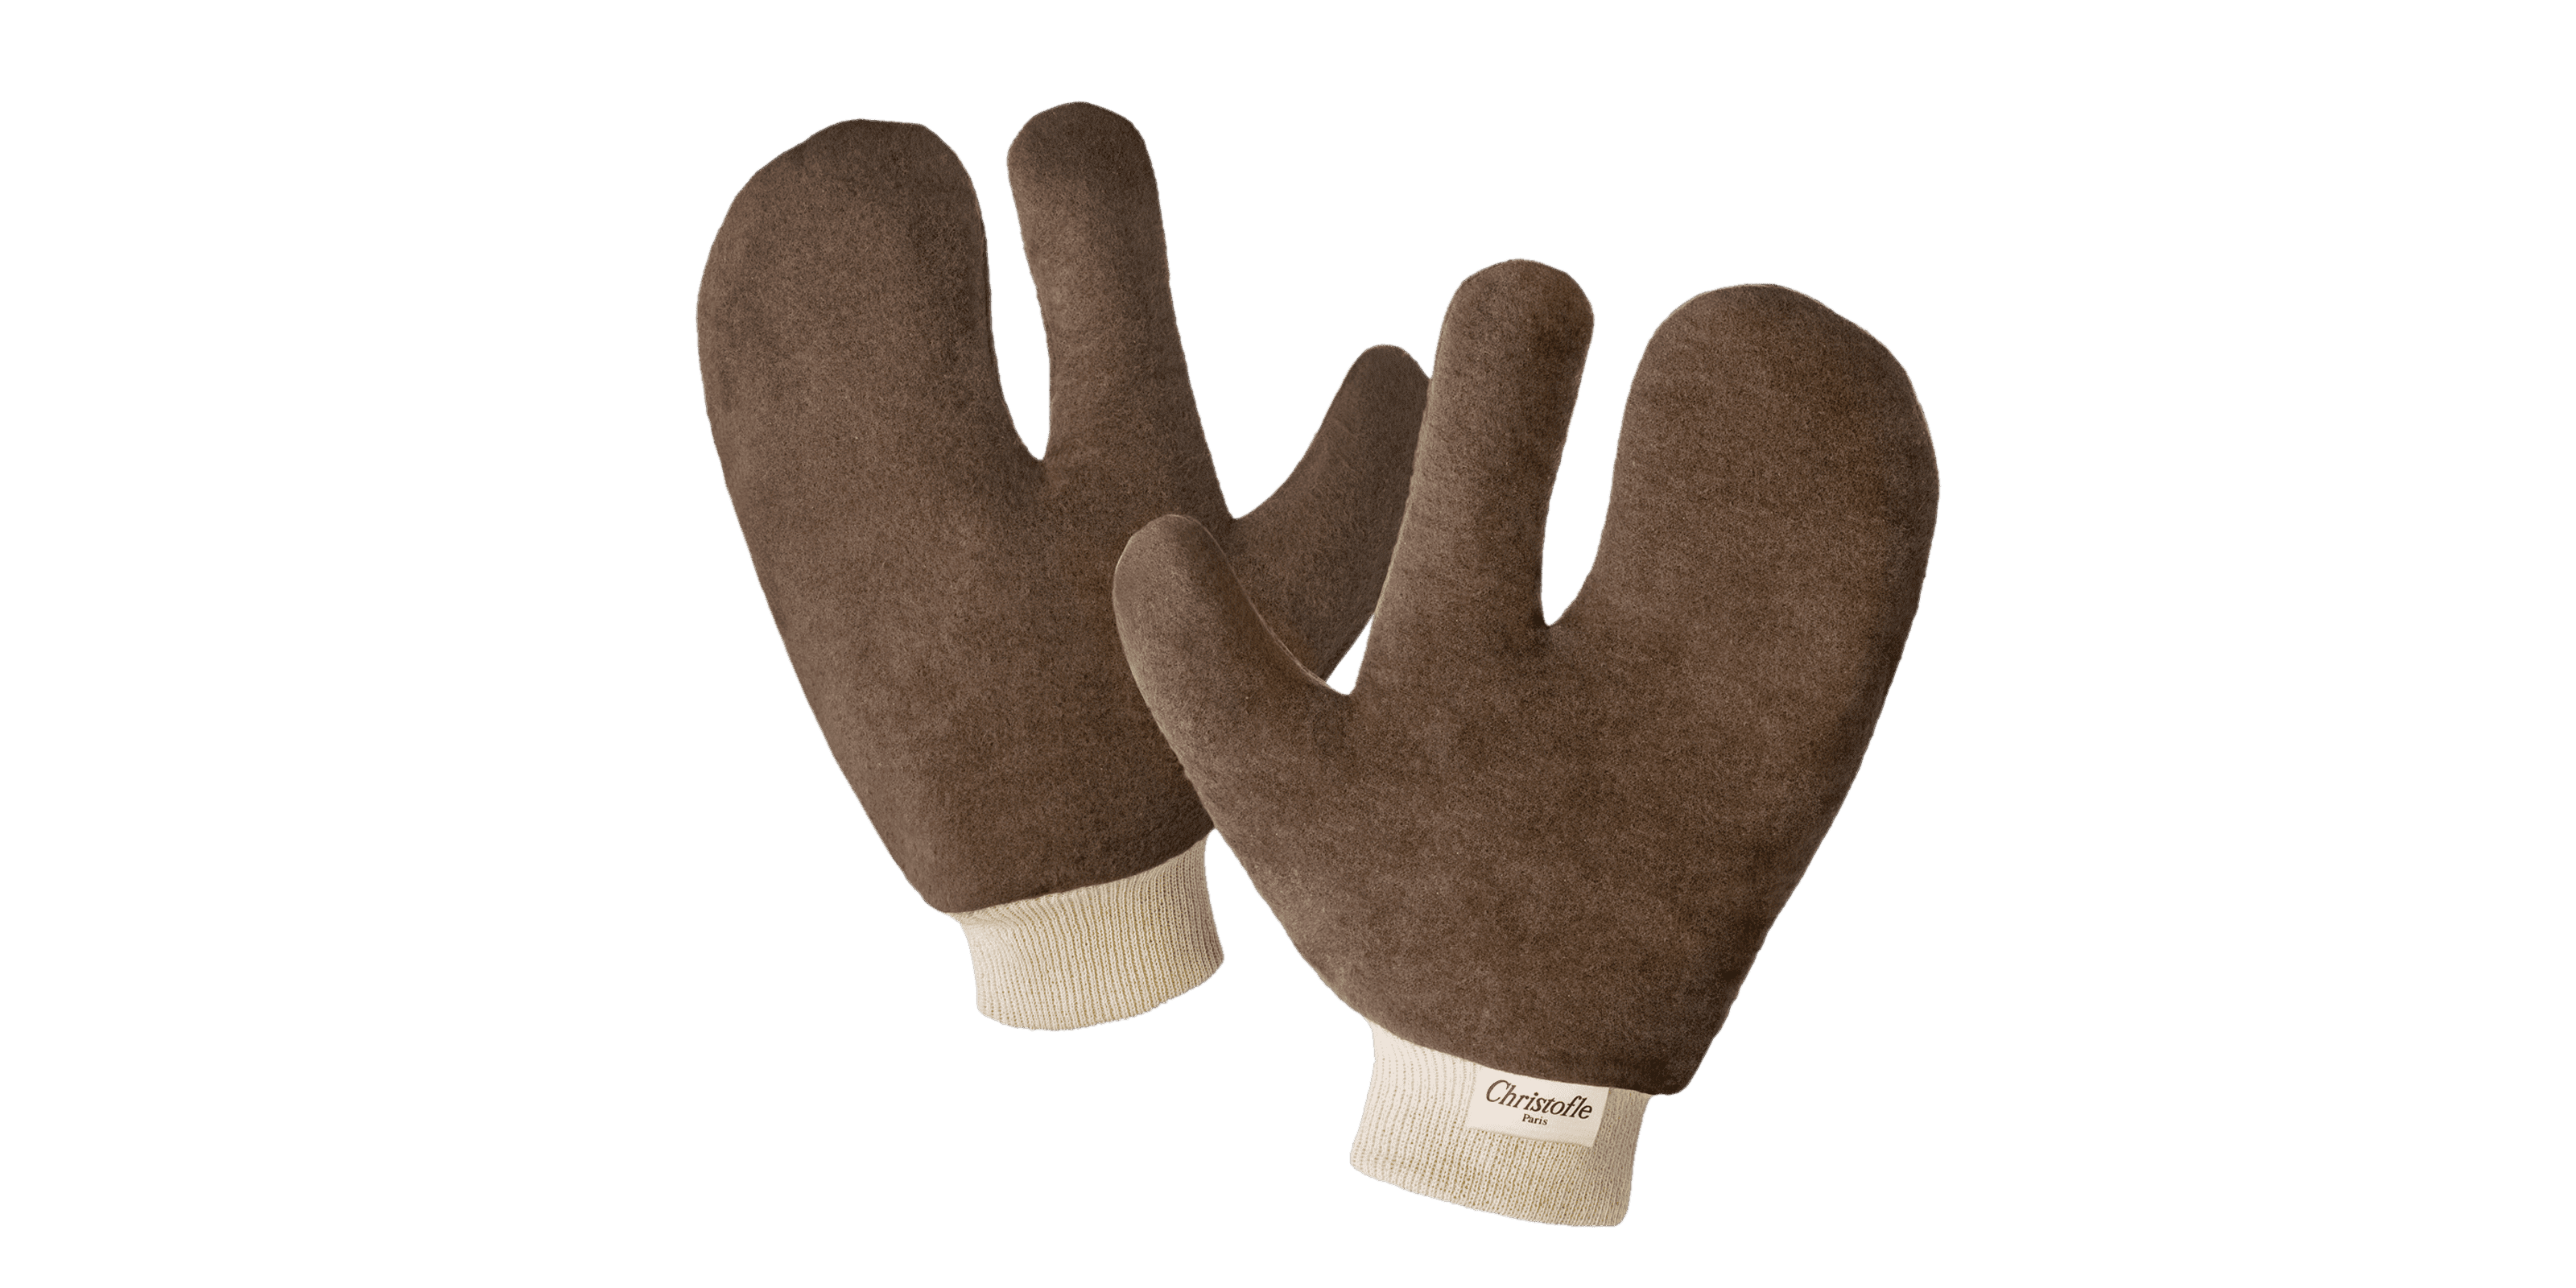 Silver Polish & Silver Gloves